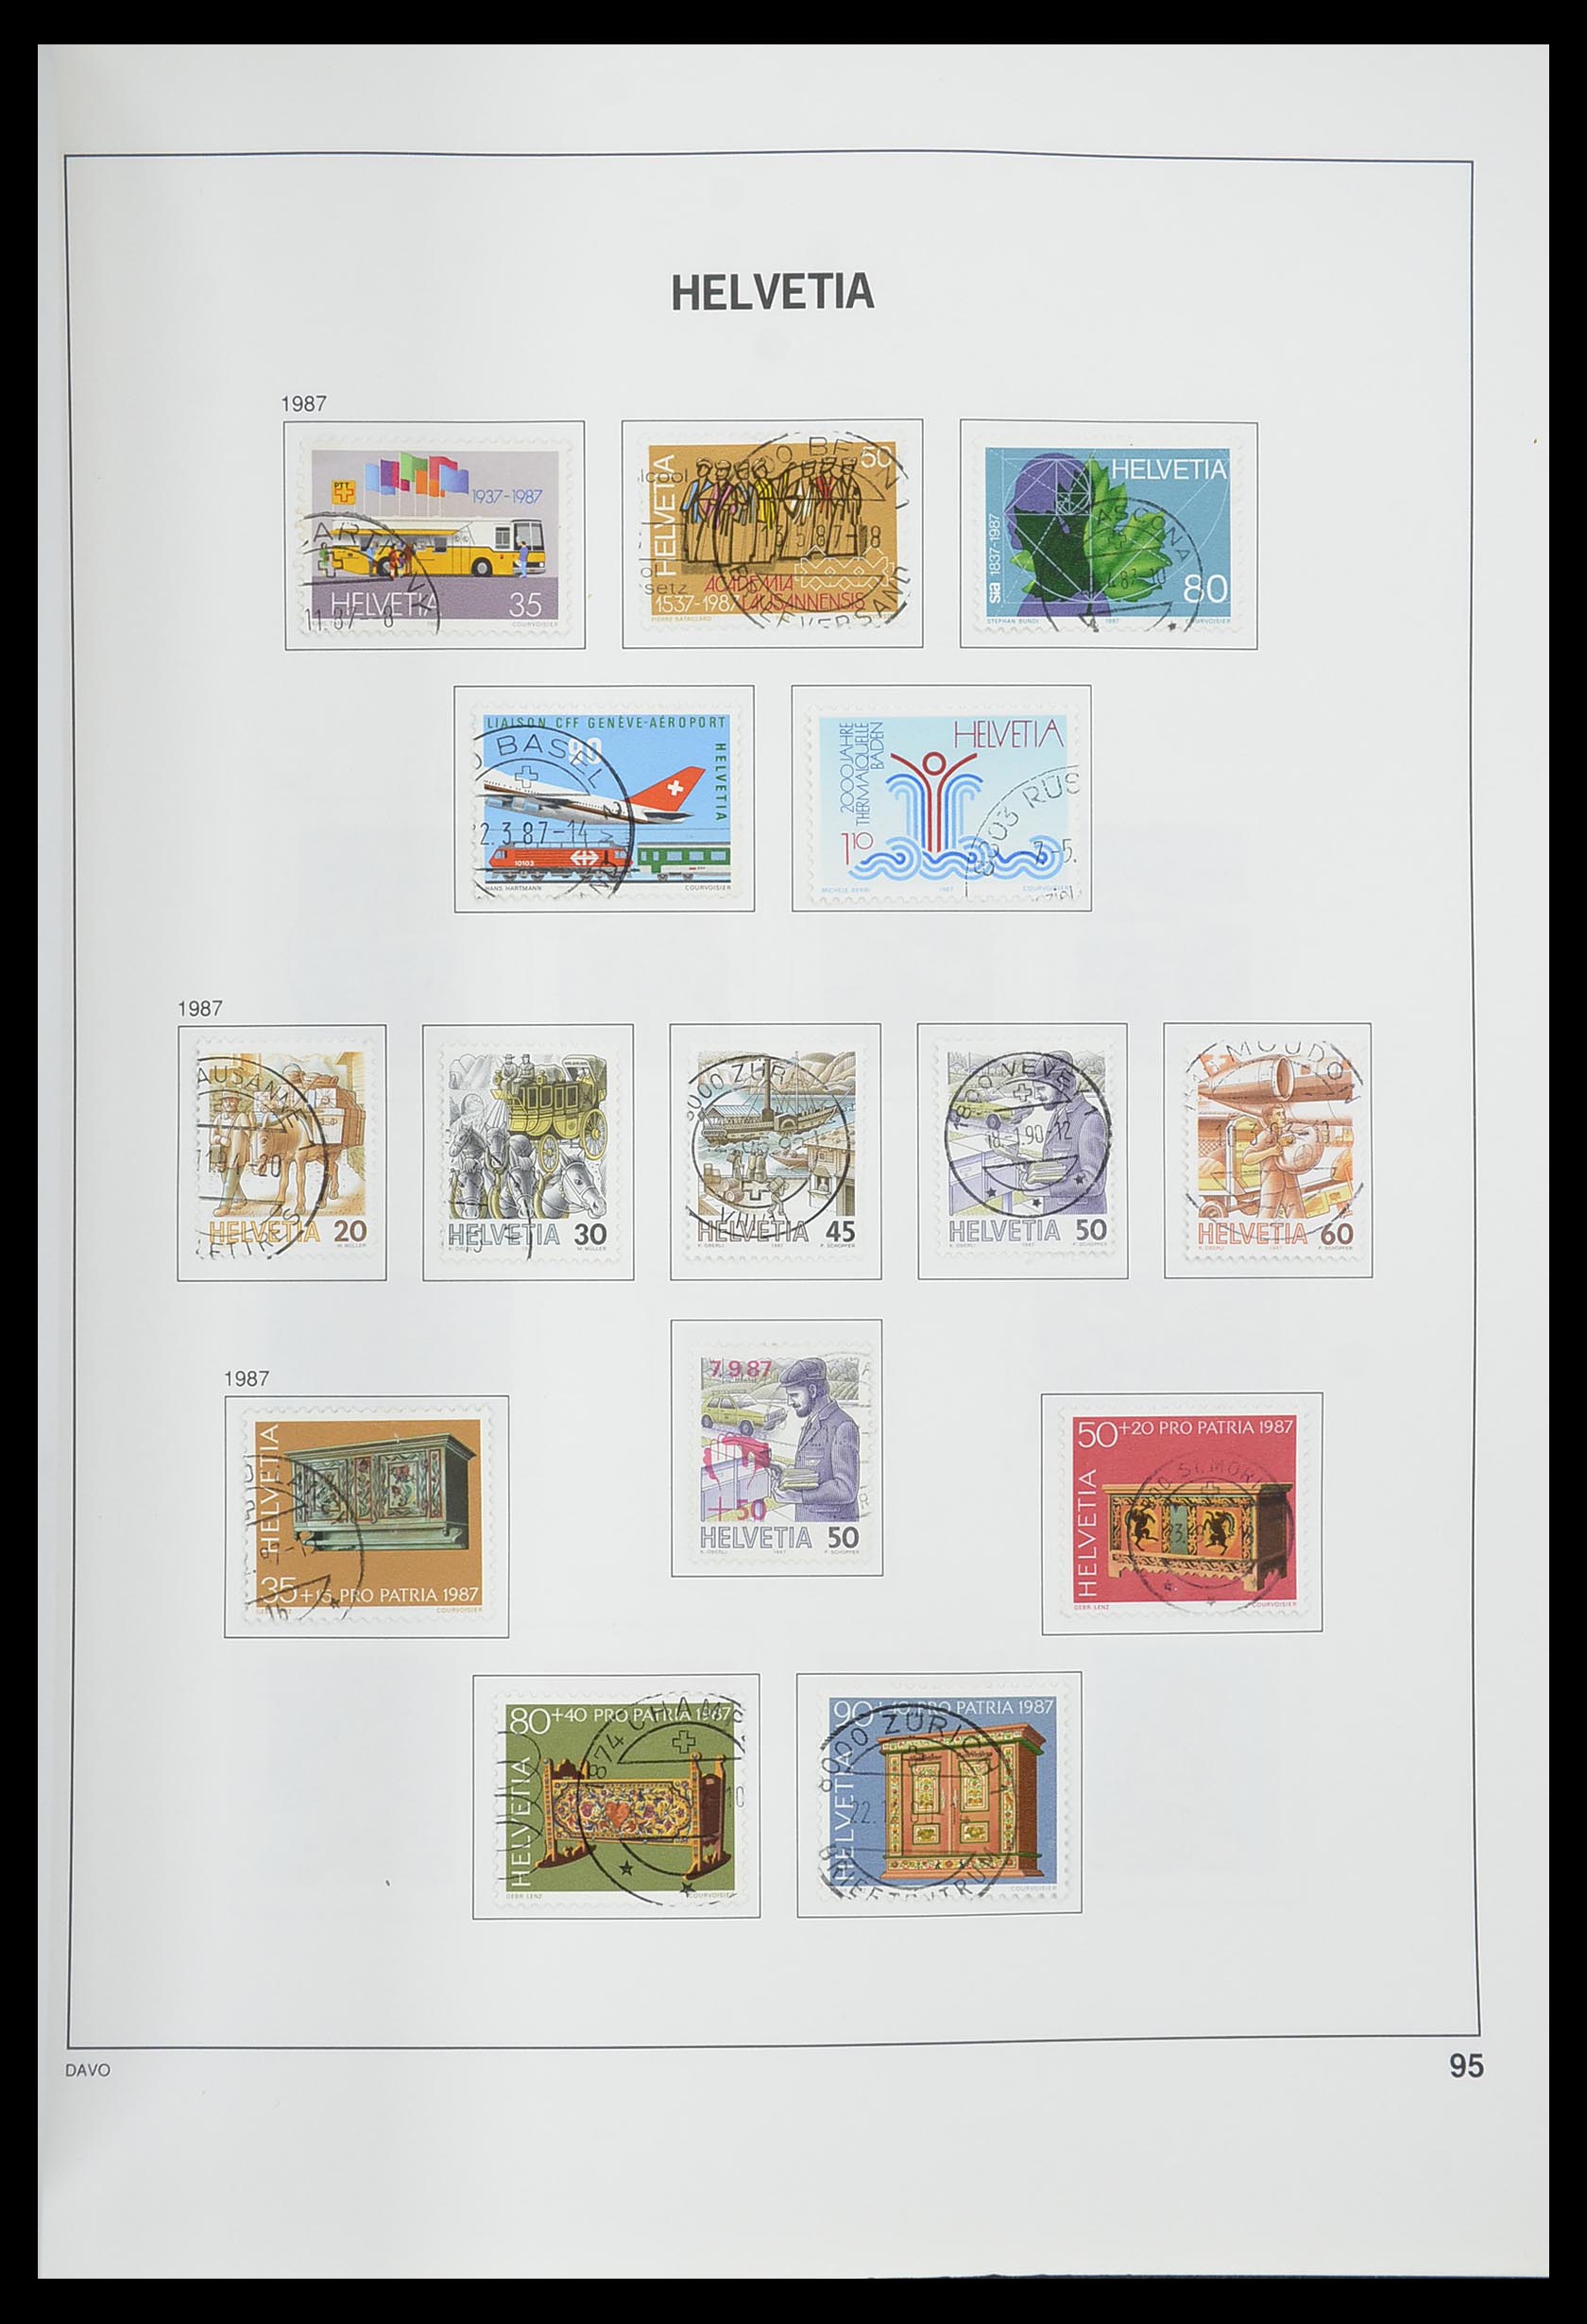 33559 096 - Stamp collection 33559 Switzerland 1850-2000.